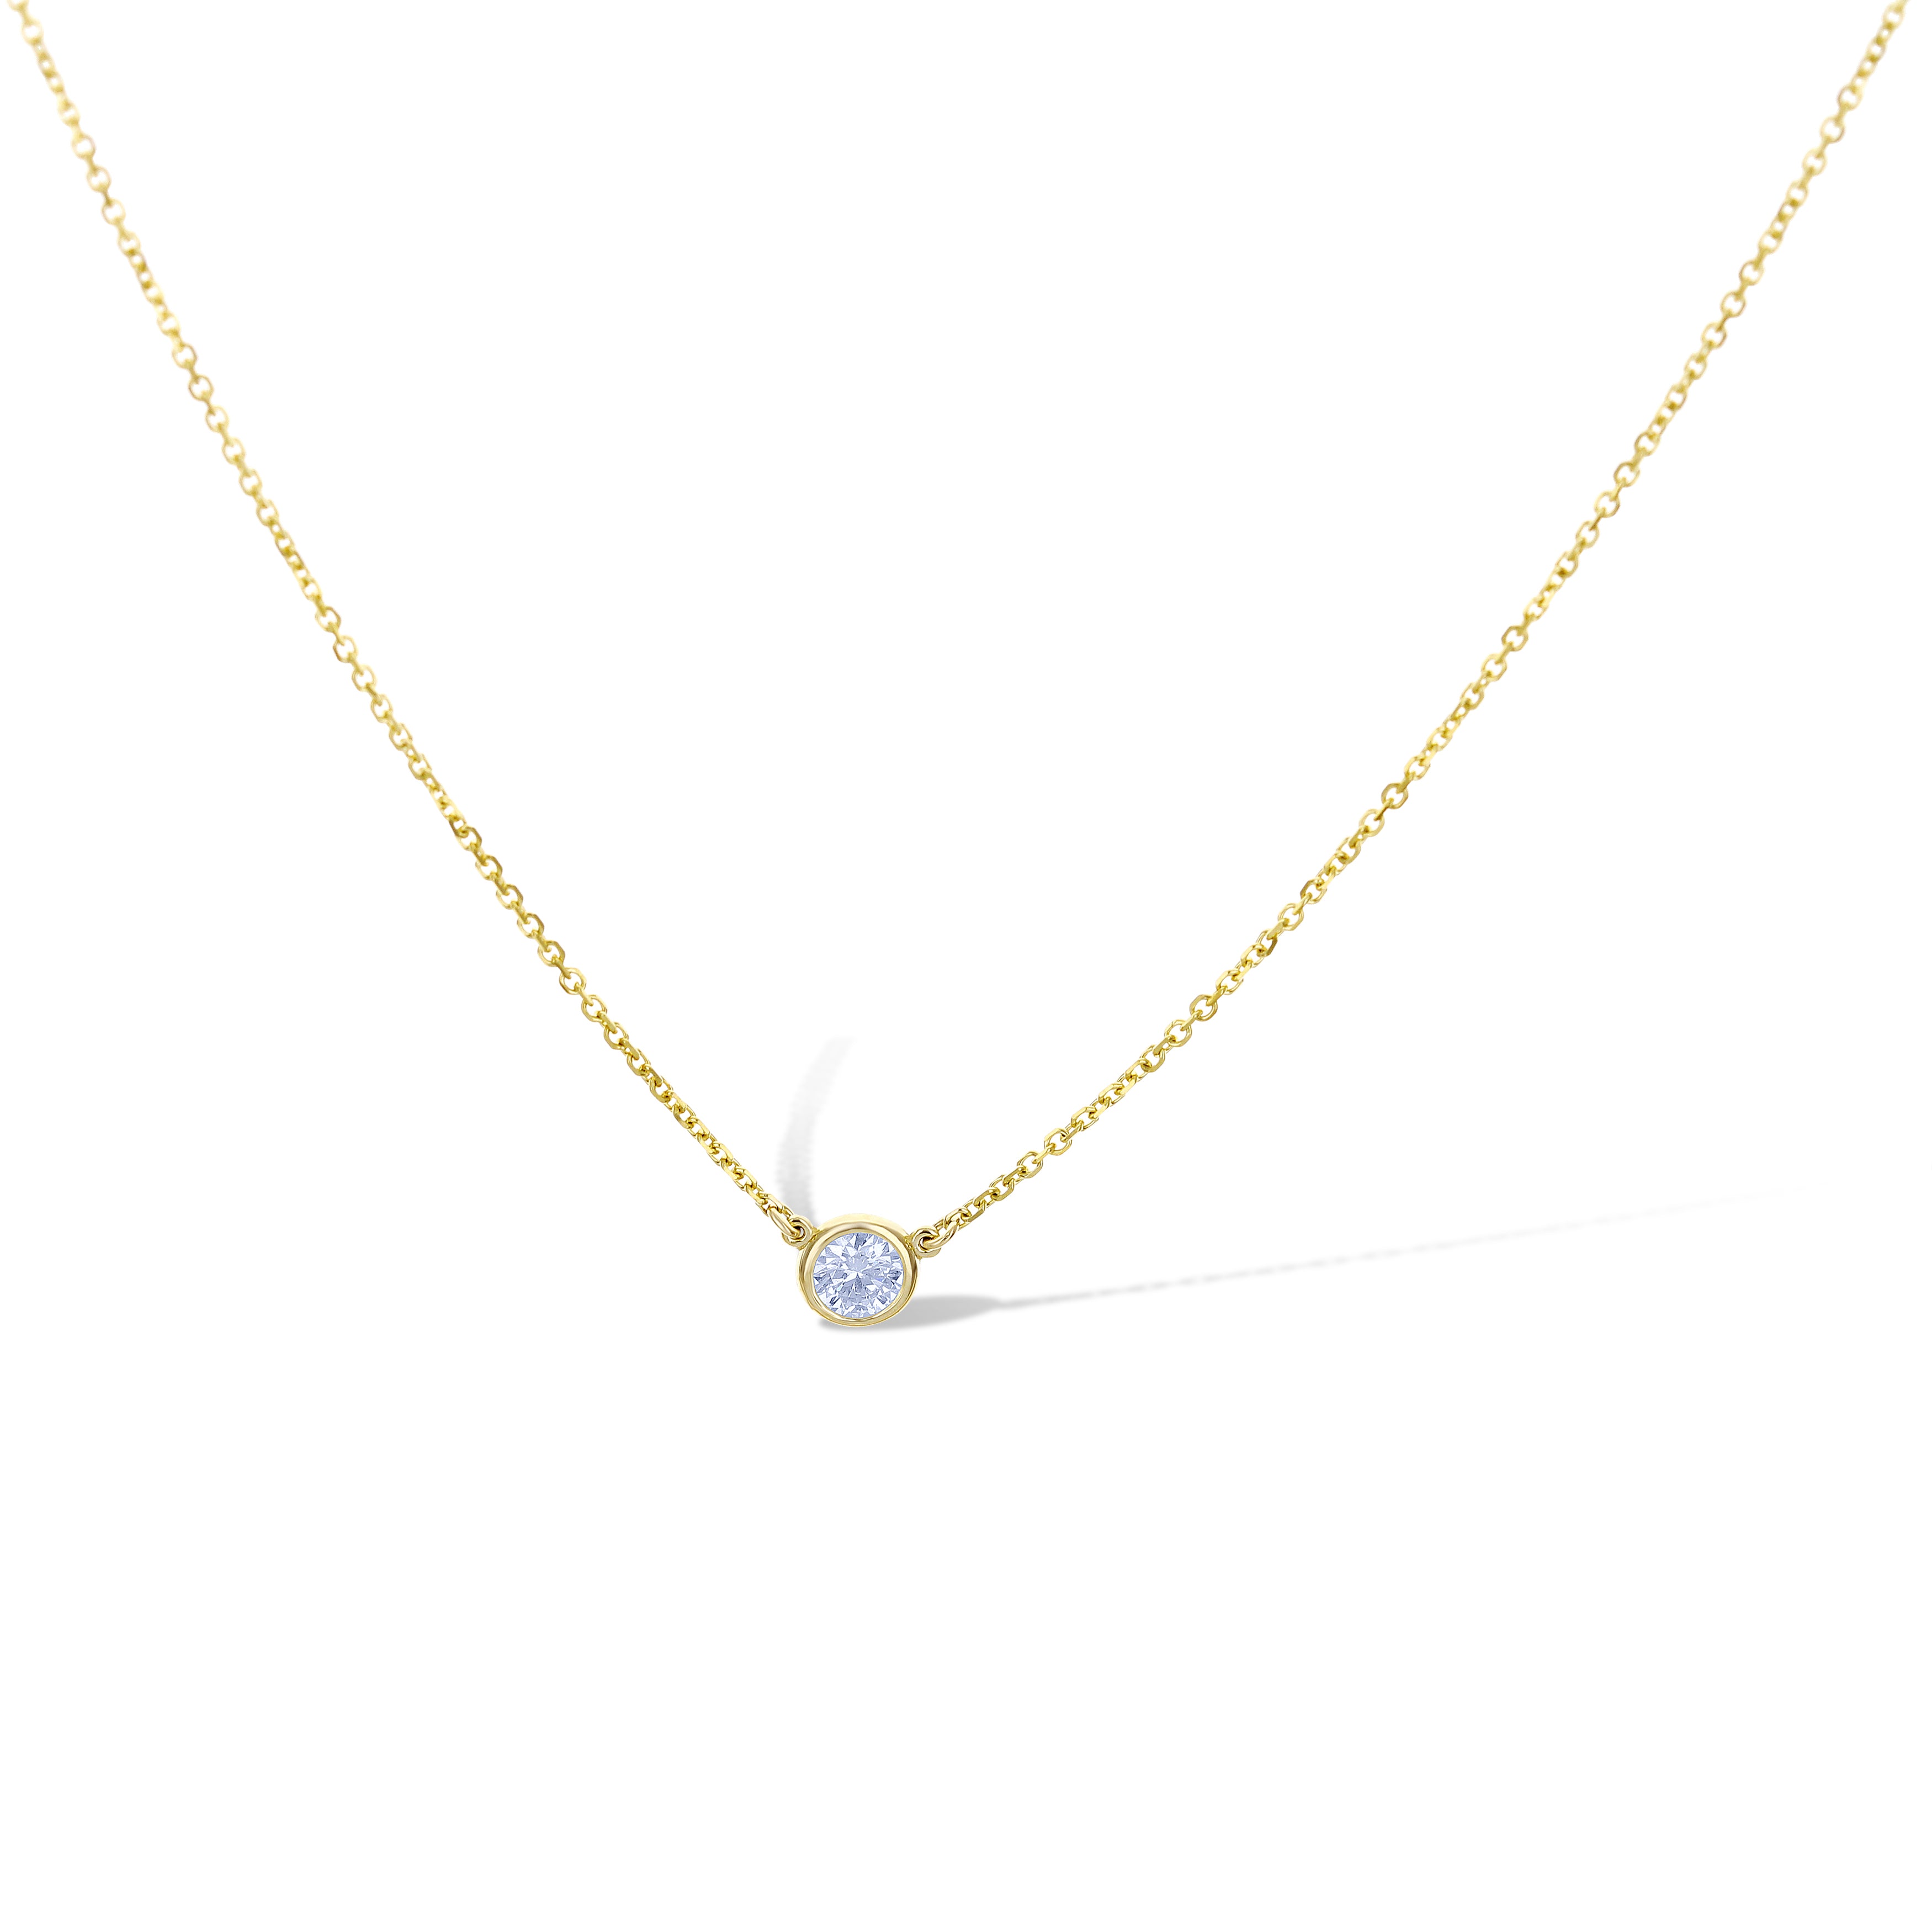 18K Yellow Gold Solitaire Bezel Round Diamond Necklace 18"